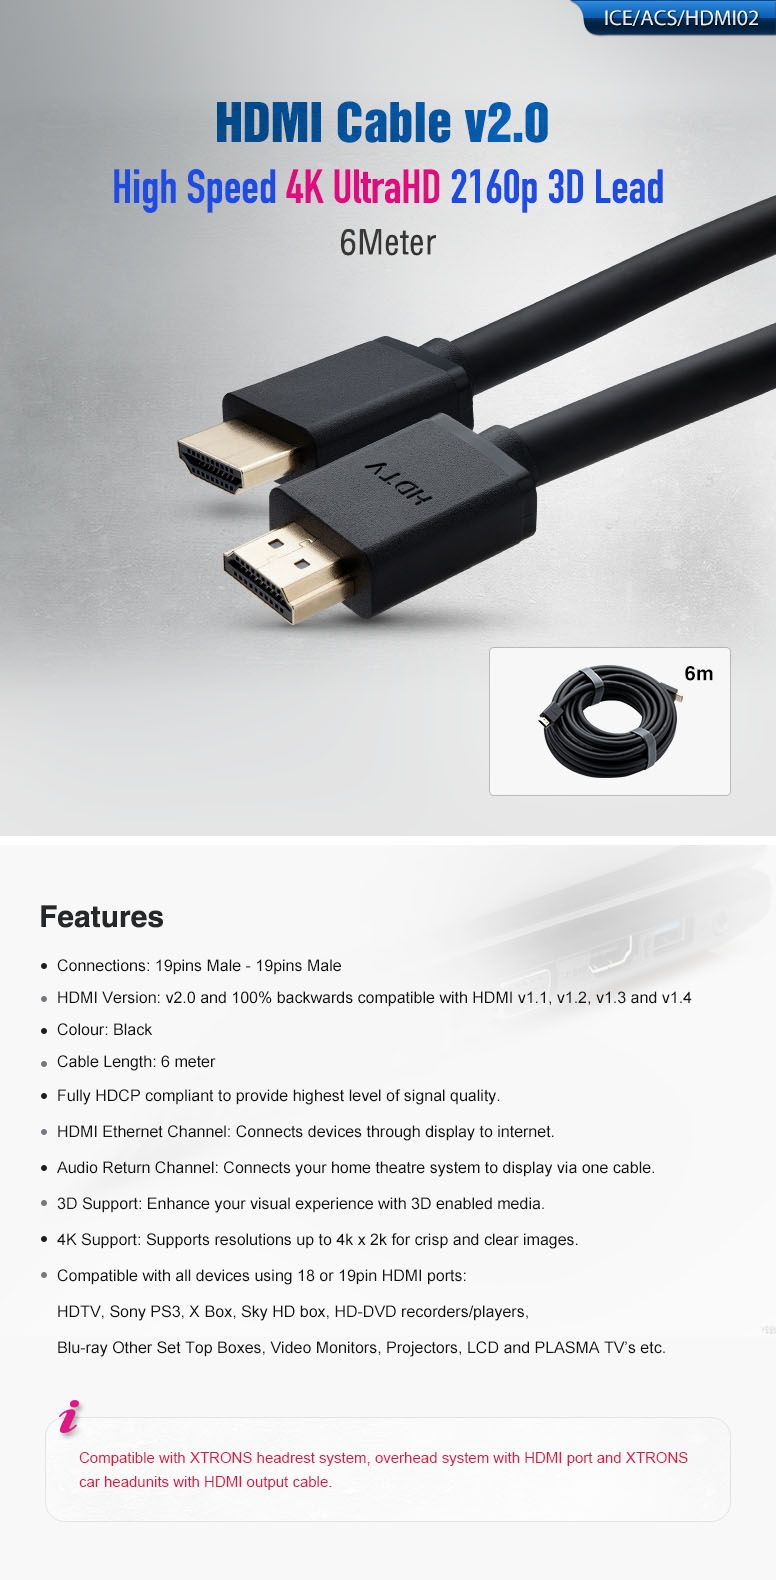 6m High Speed 4K UltraHD 2160p 3D Lead HDMI Cable V2.0